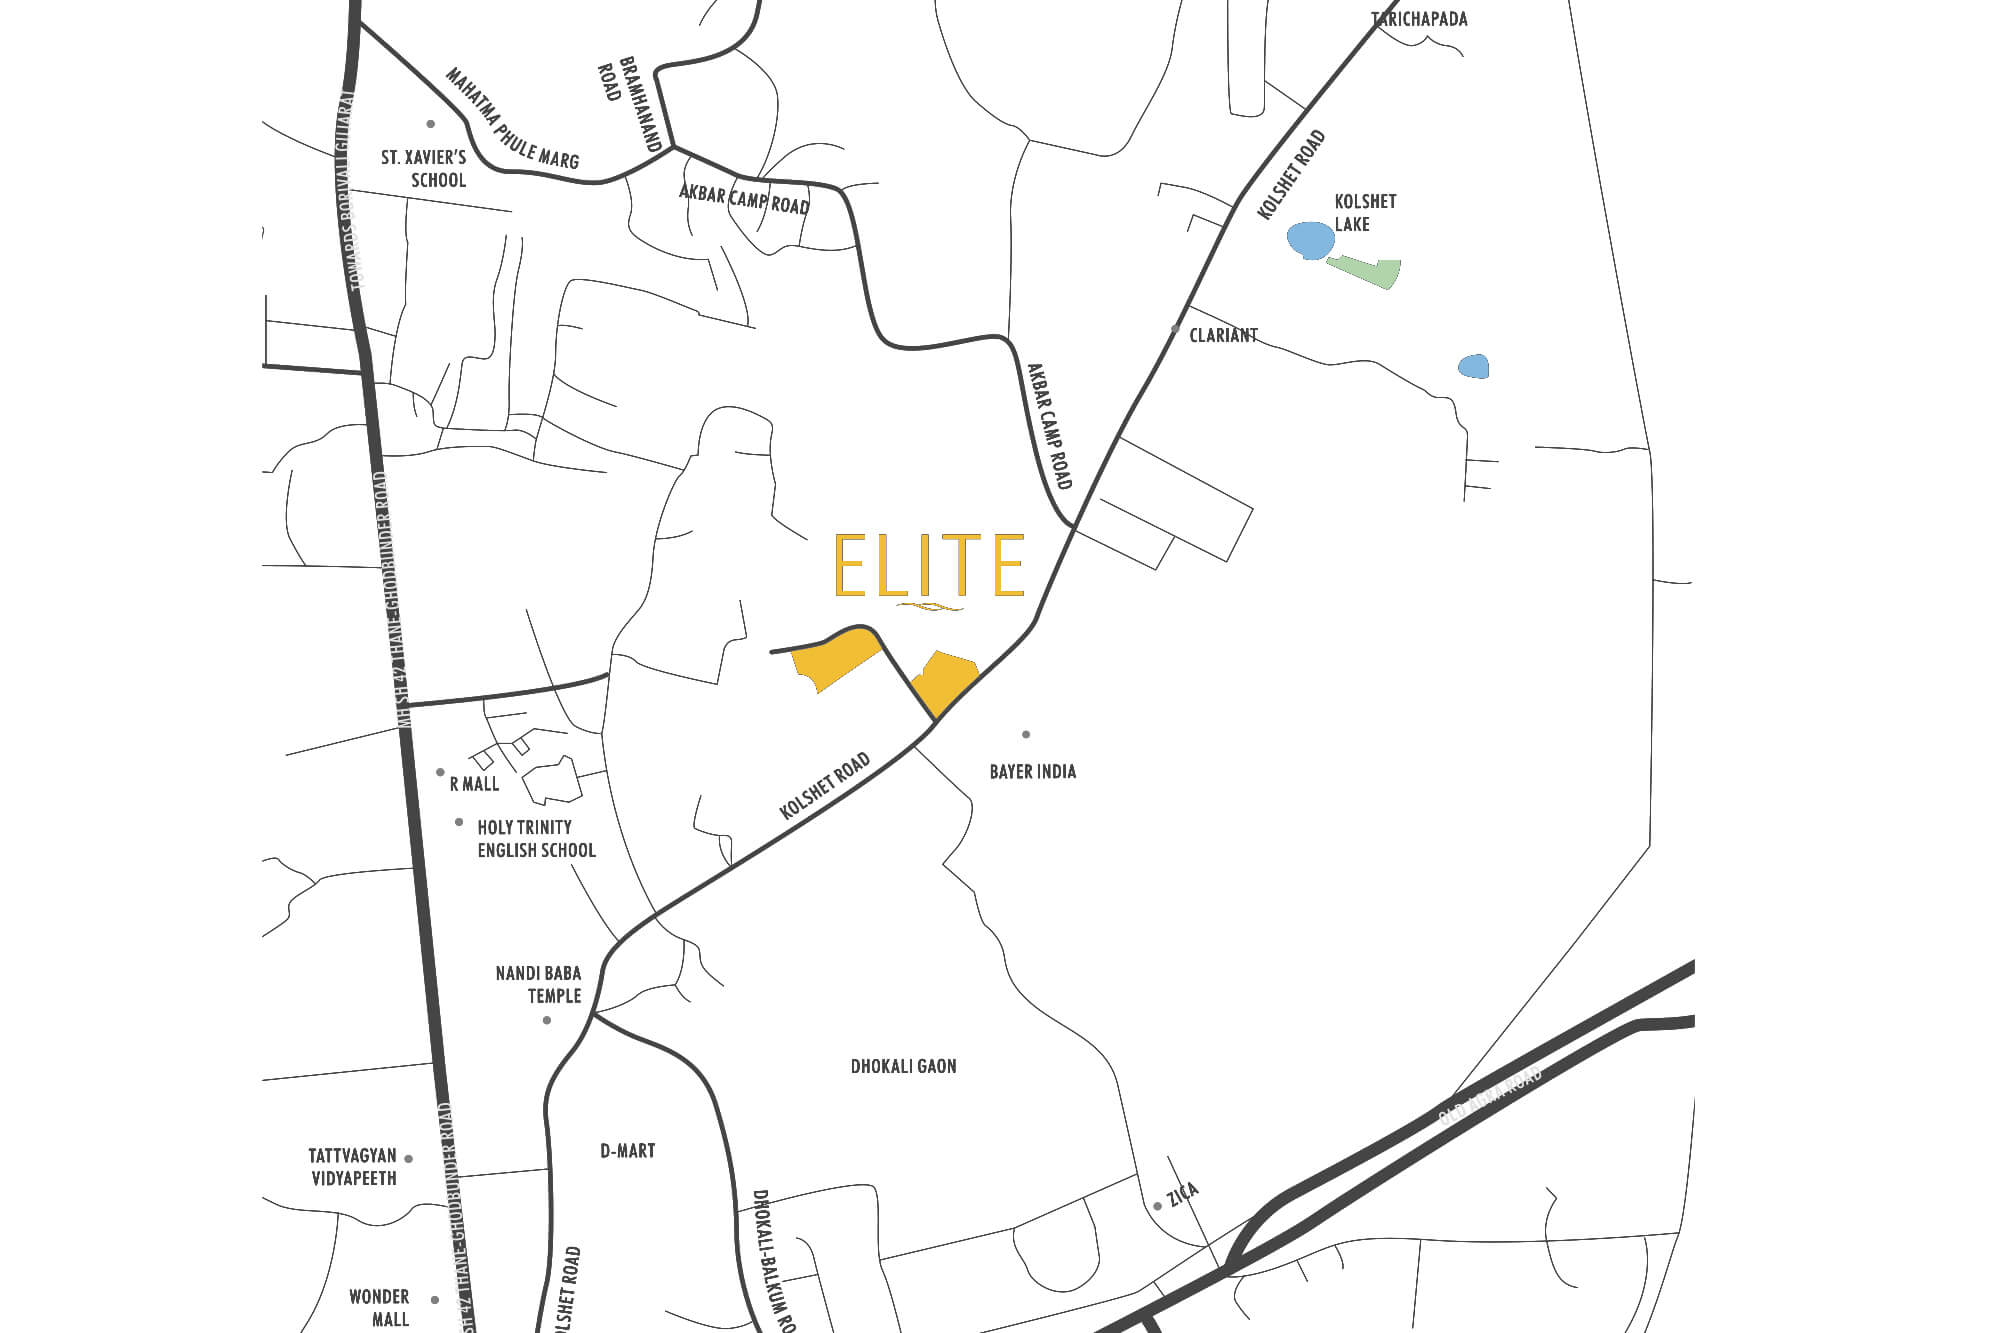 Wadhwa Elite Location Map